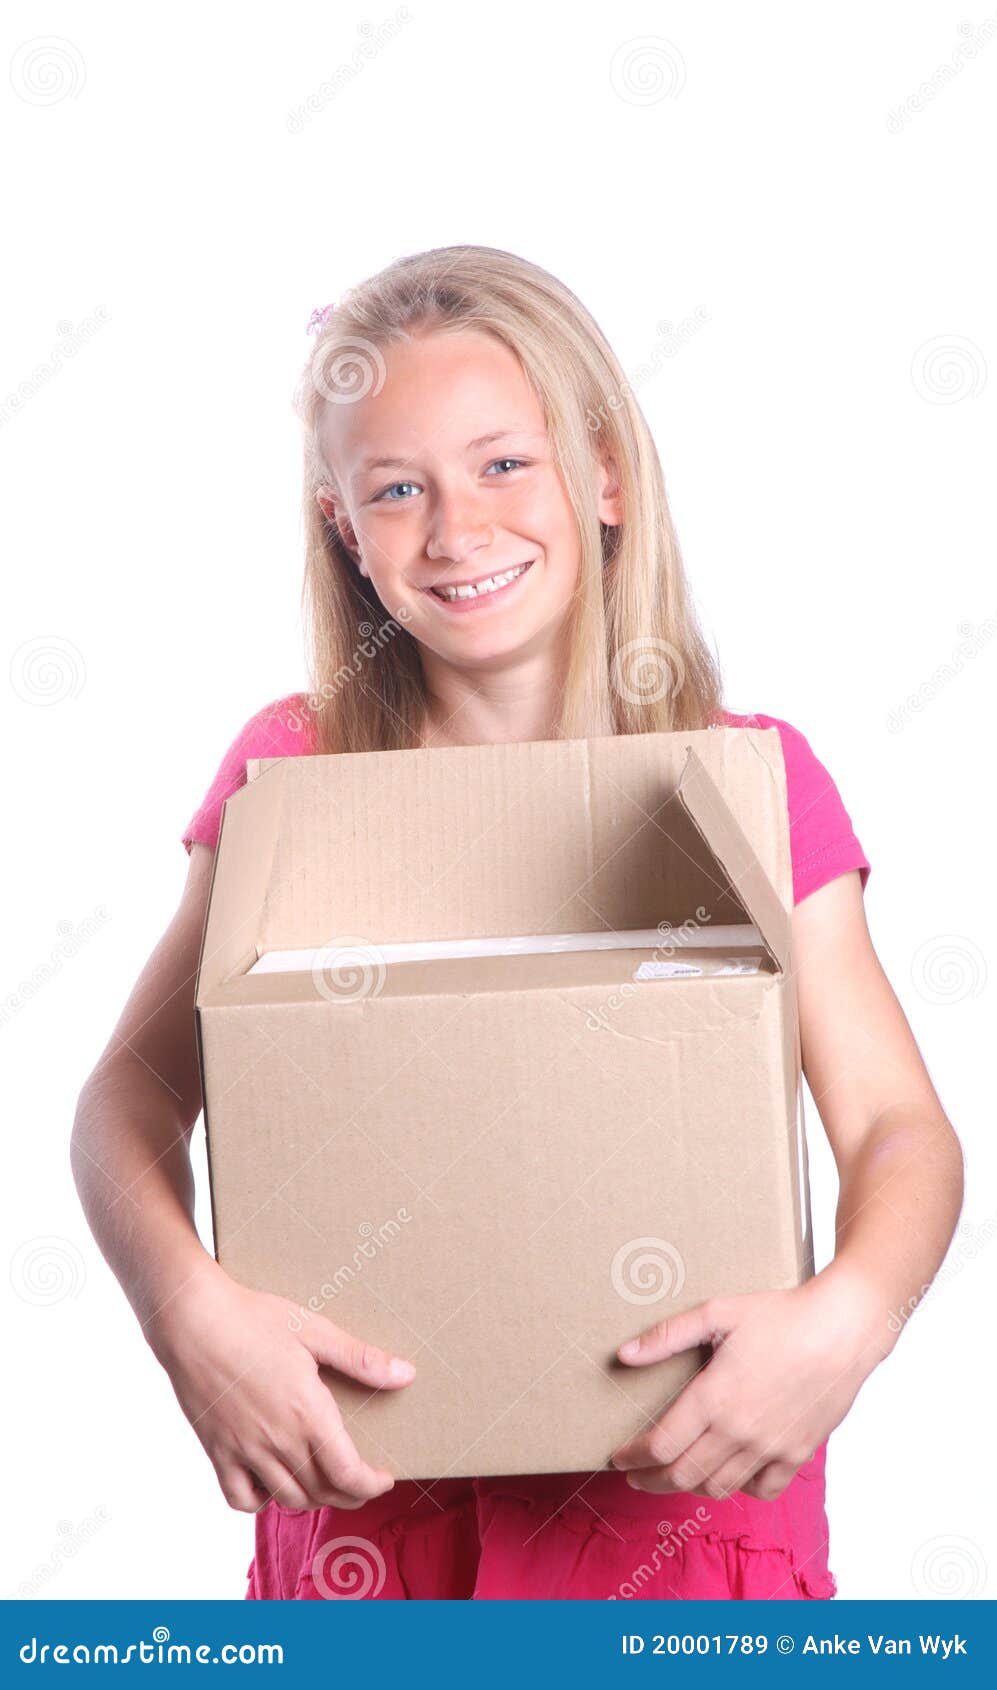 https://thumbs.dreamstime.com/z/girl-carrying-box-20001789.jpg